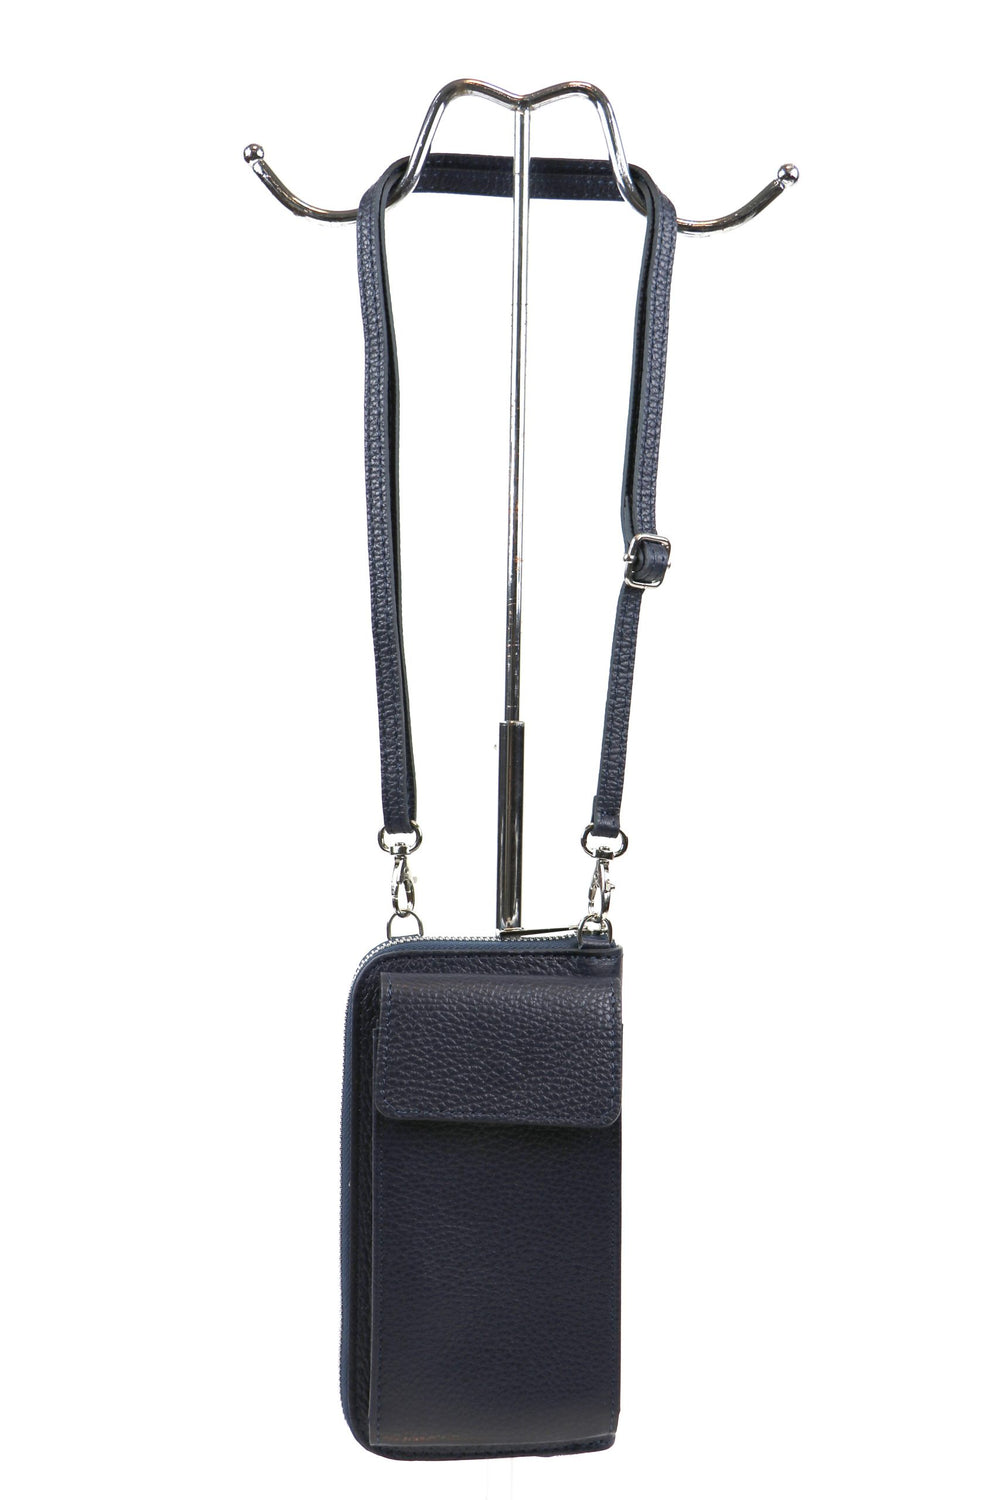 Bagitali Crossbody Leather Purse / Phone Bag - Navy